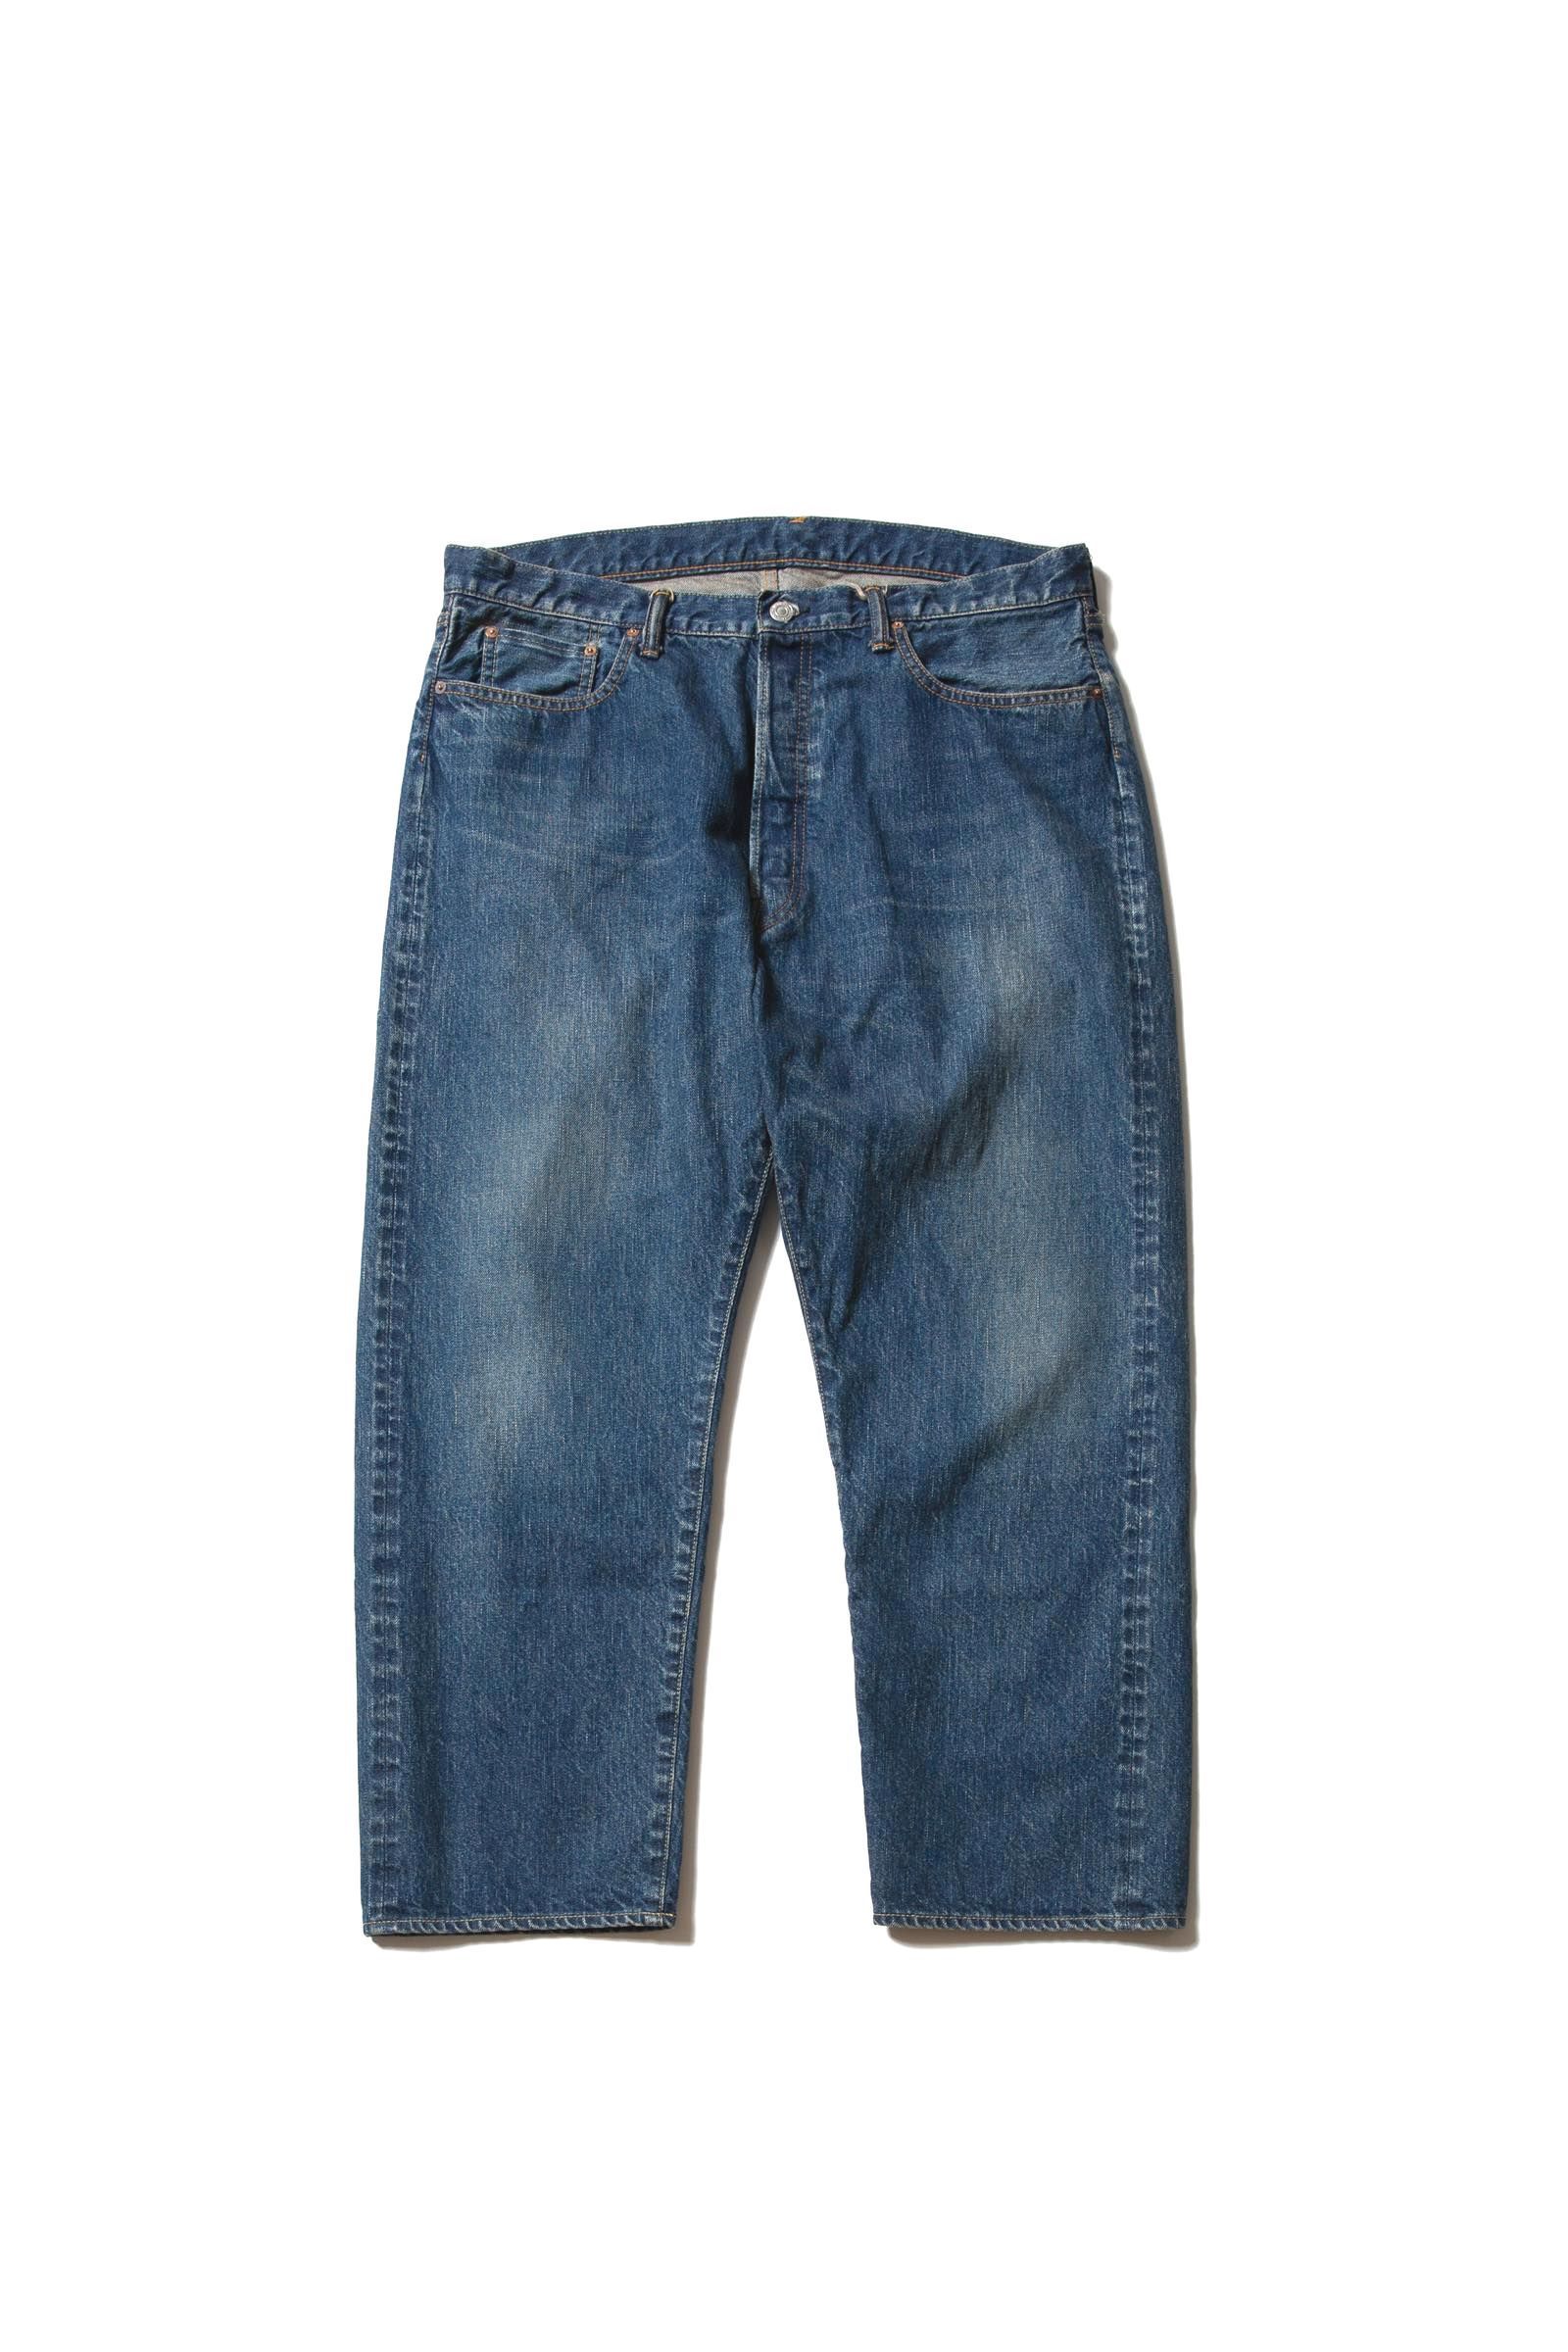 A.PRESSE - washed denim wide pants -indigo- 22aw | asterisk